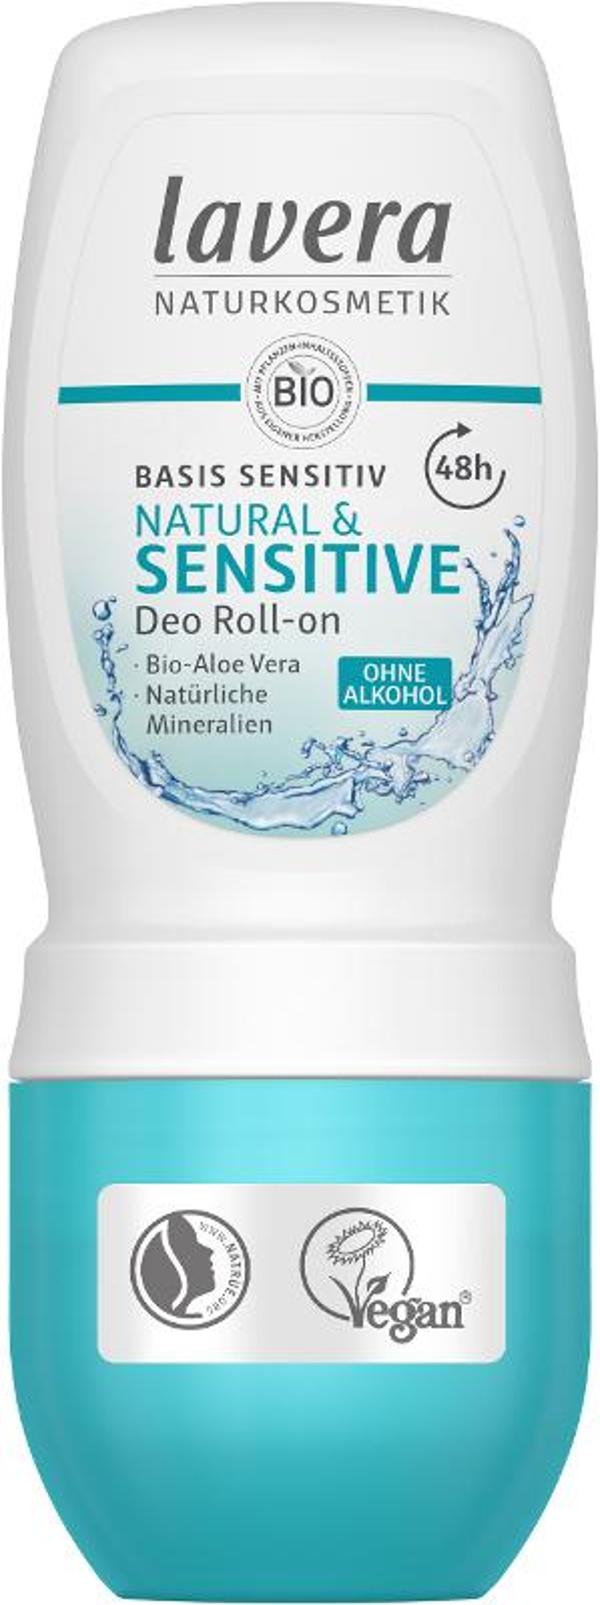 Produktfoto zu Deo Roll on Sensitive